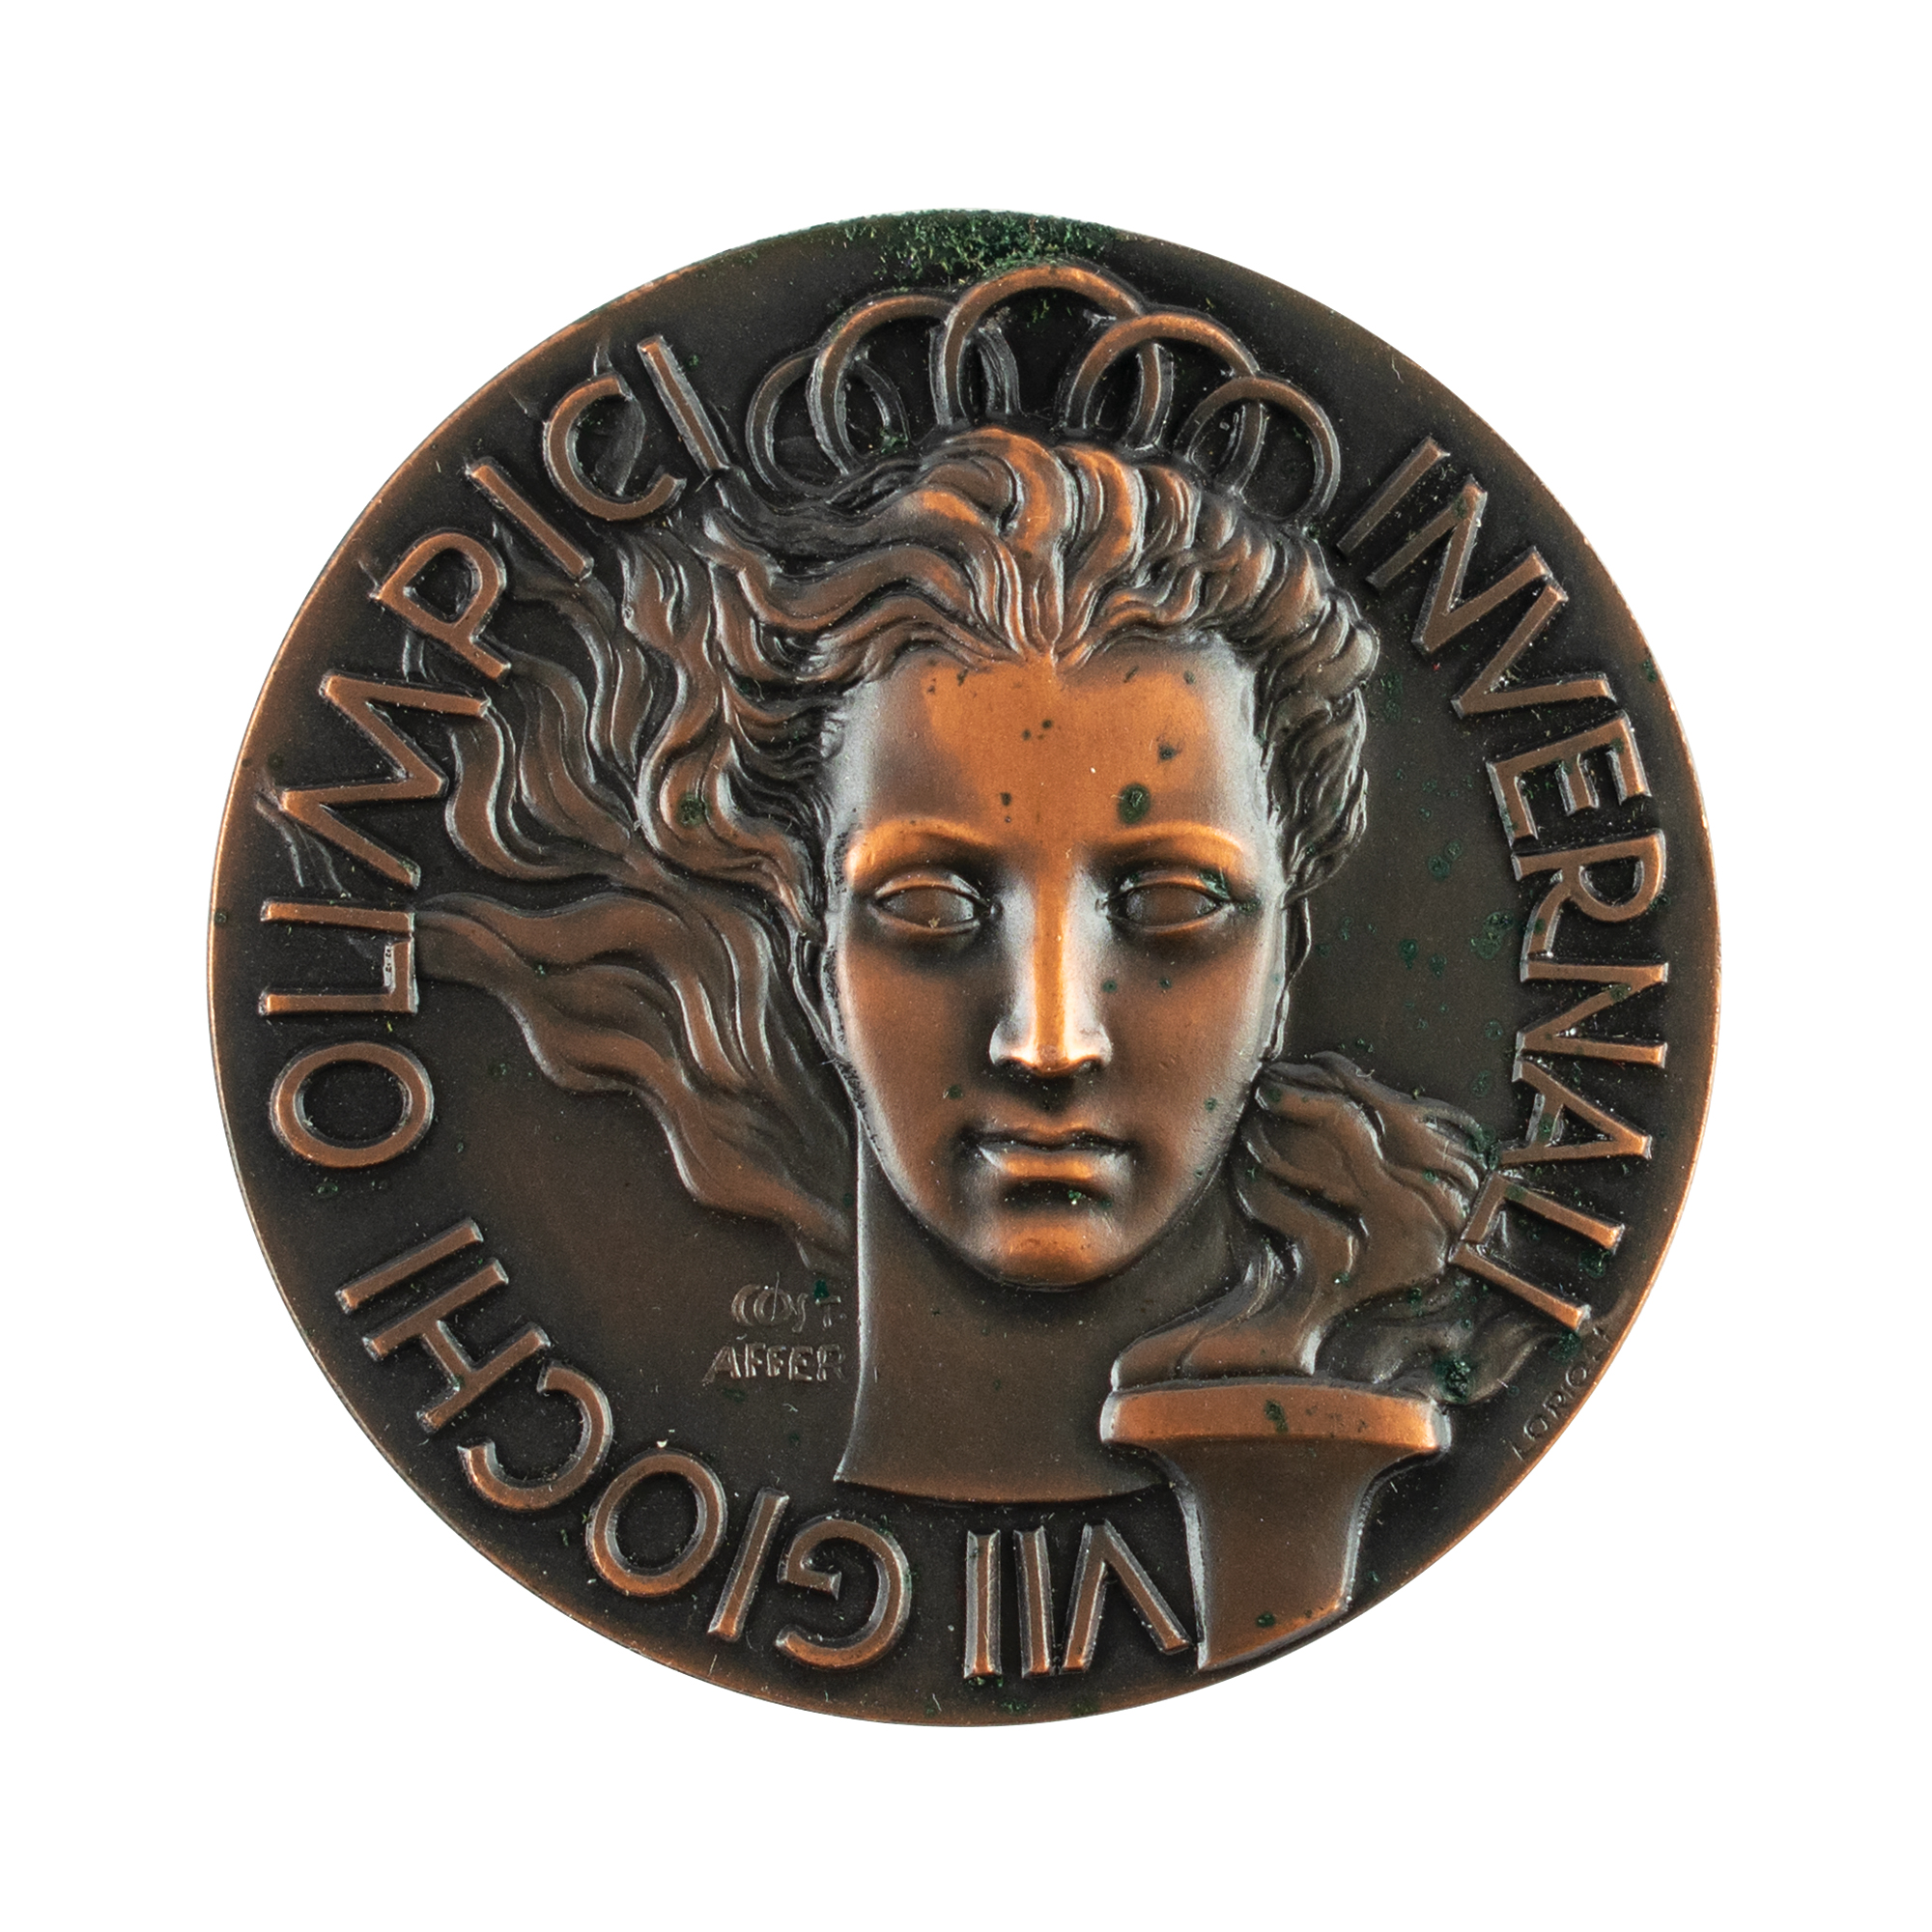 Lot #6053 Tug Wilson's Cortina 1956 Winter Olympics Participation Medal